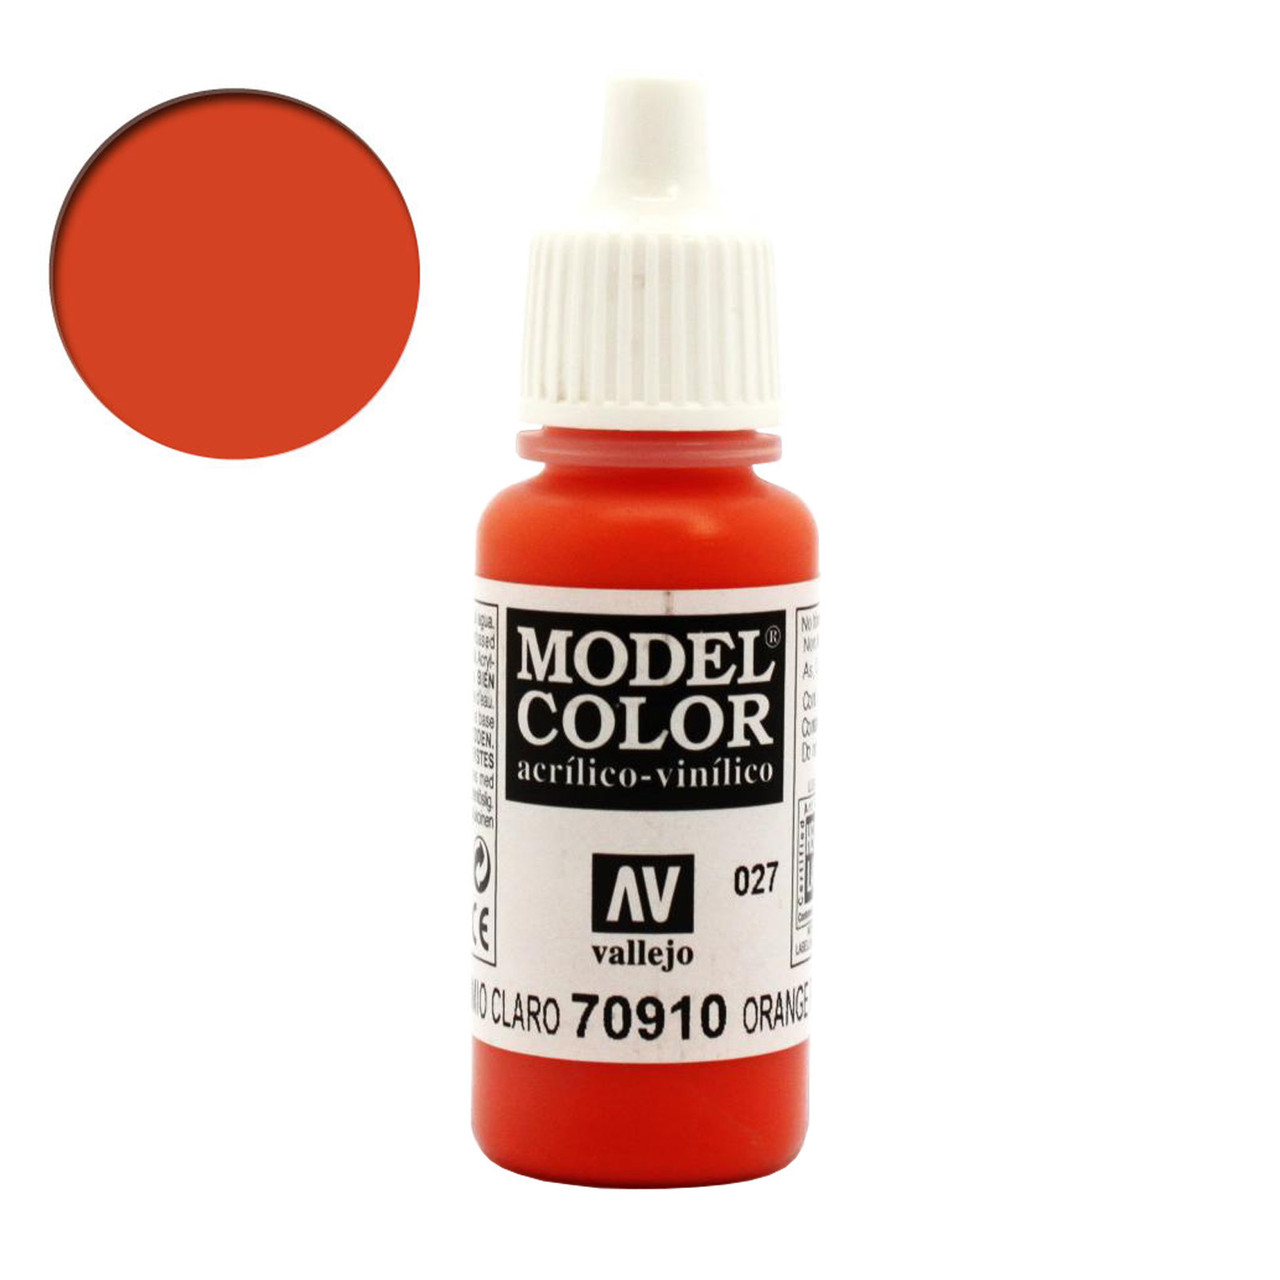 Vallejo Model Color acrylic paint - 70.851 Bright Orange